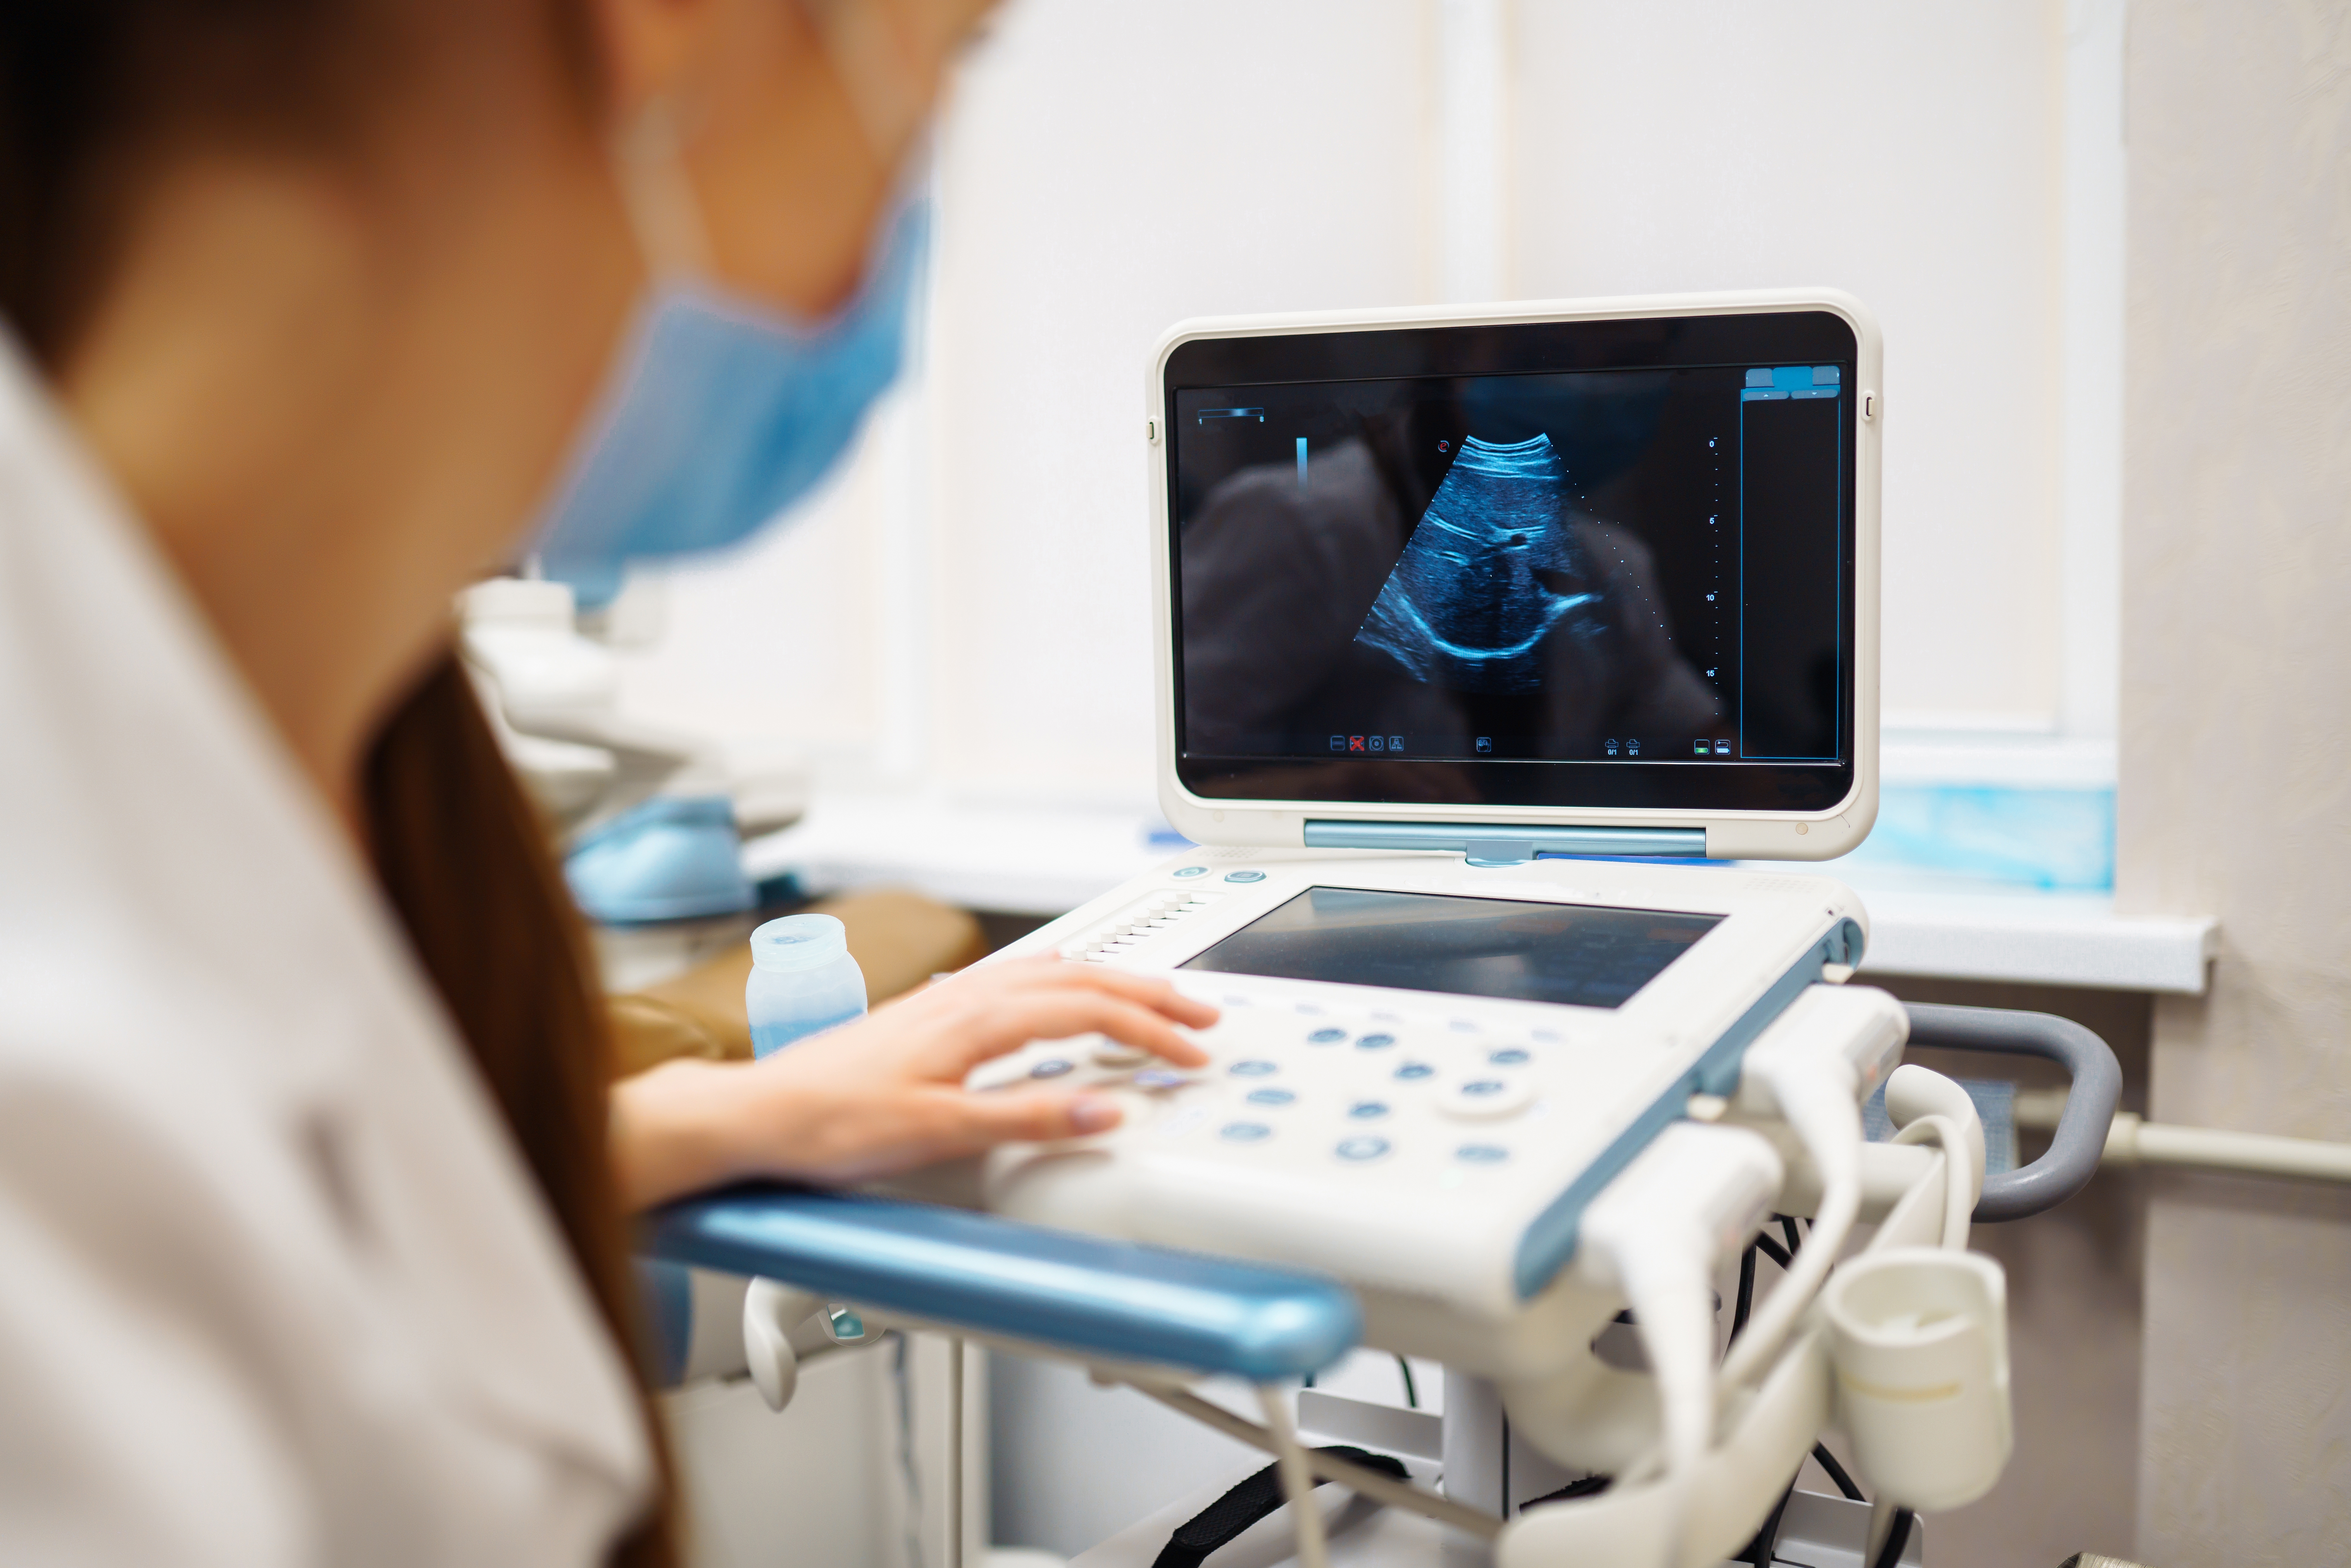 Ultrasound machine | Source: Shutterstock